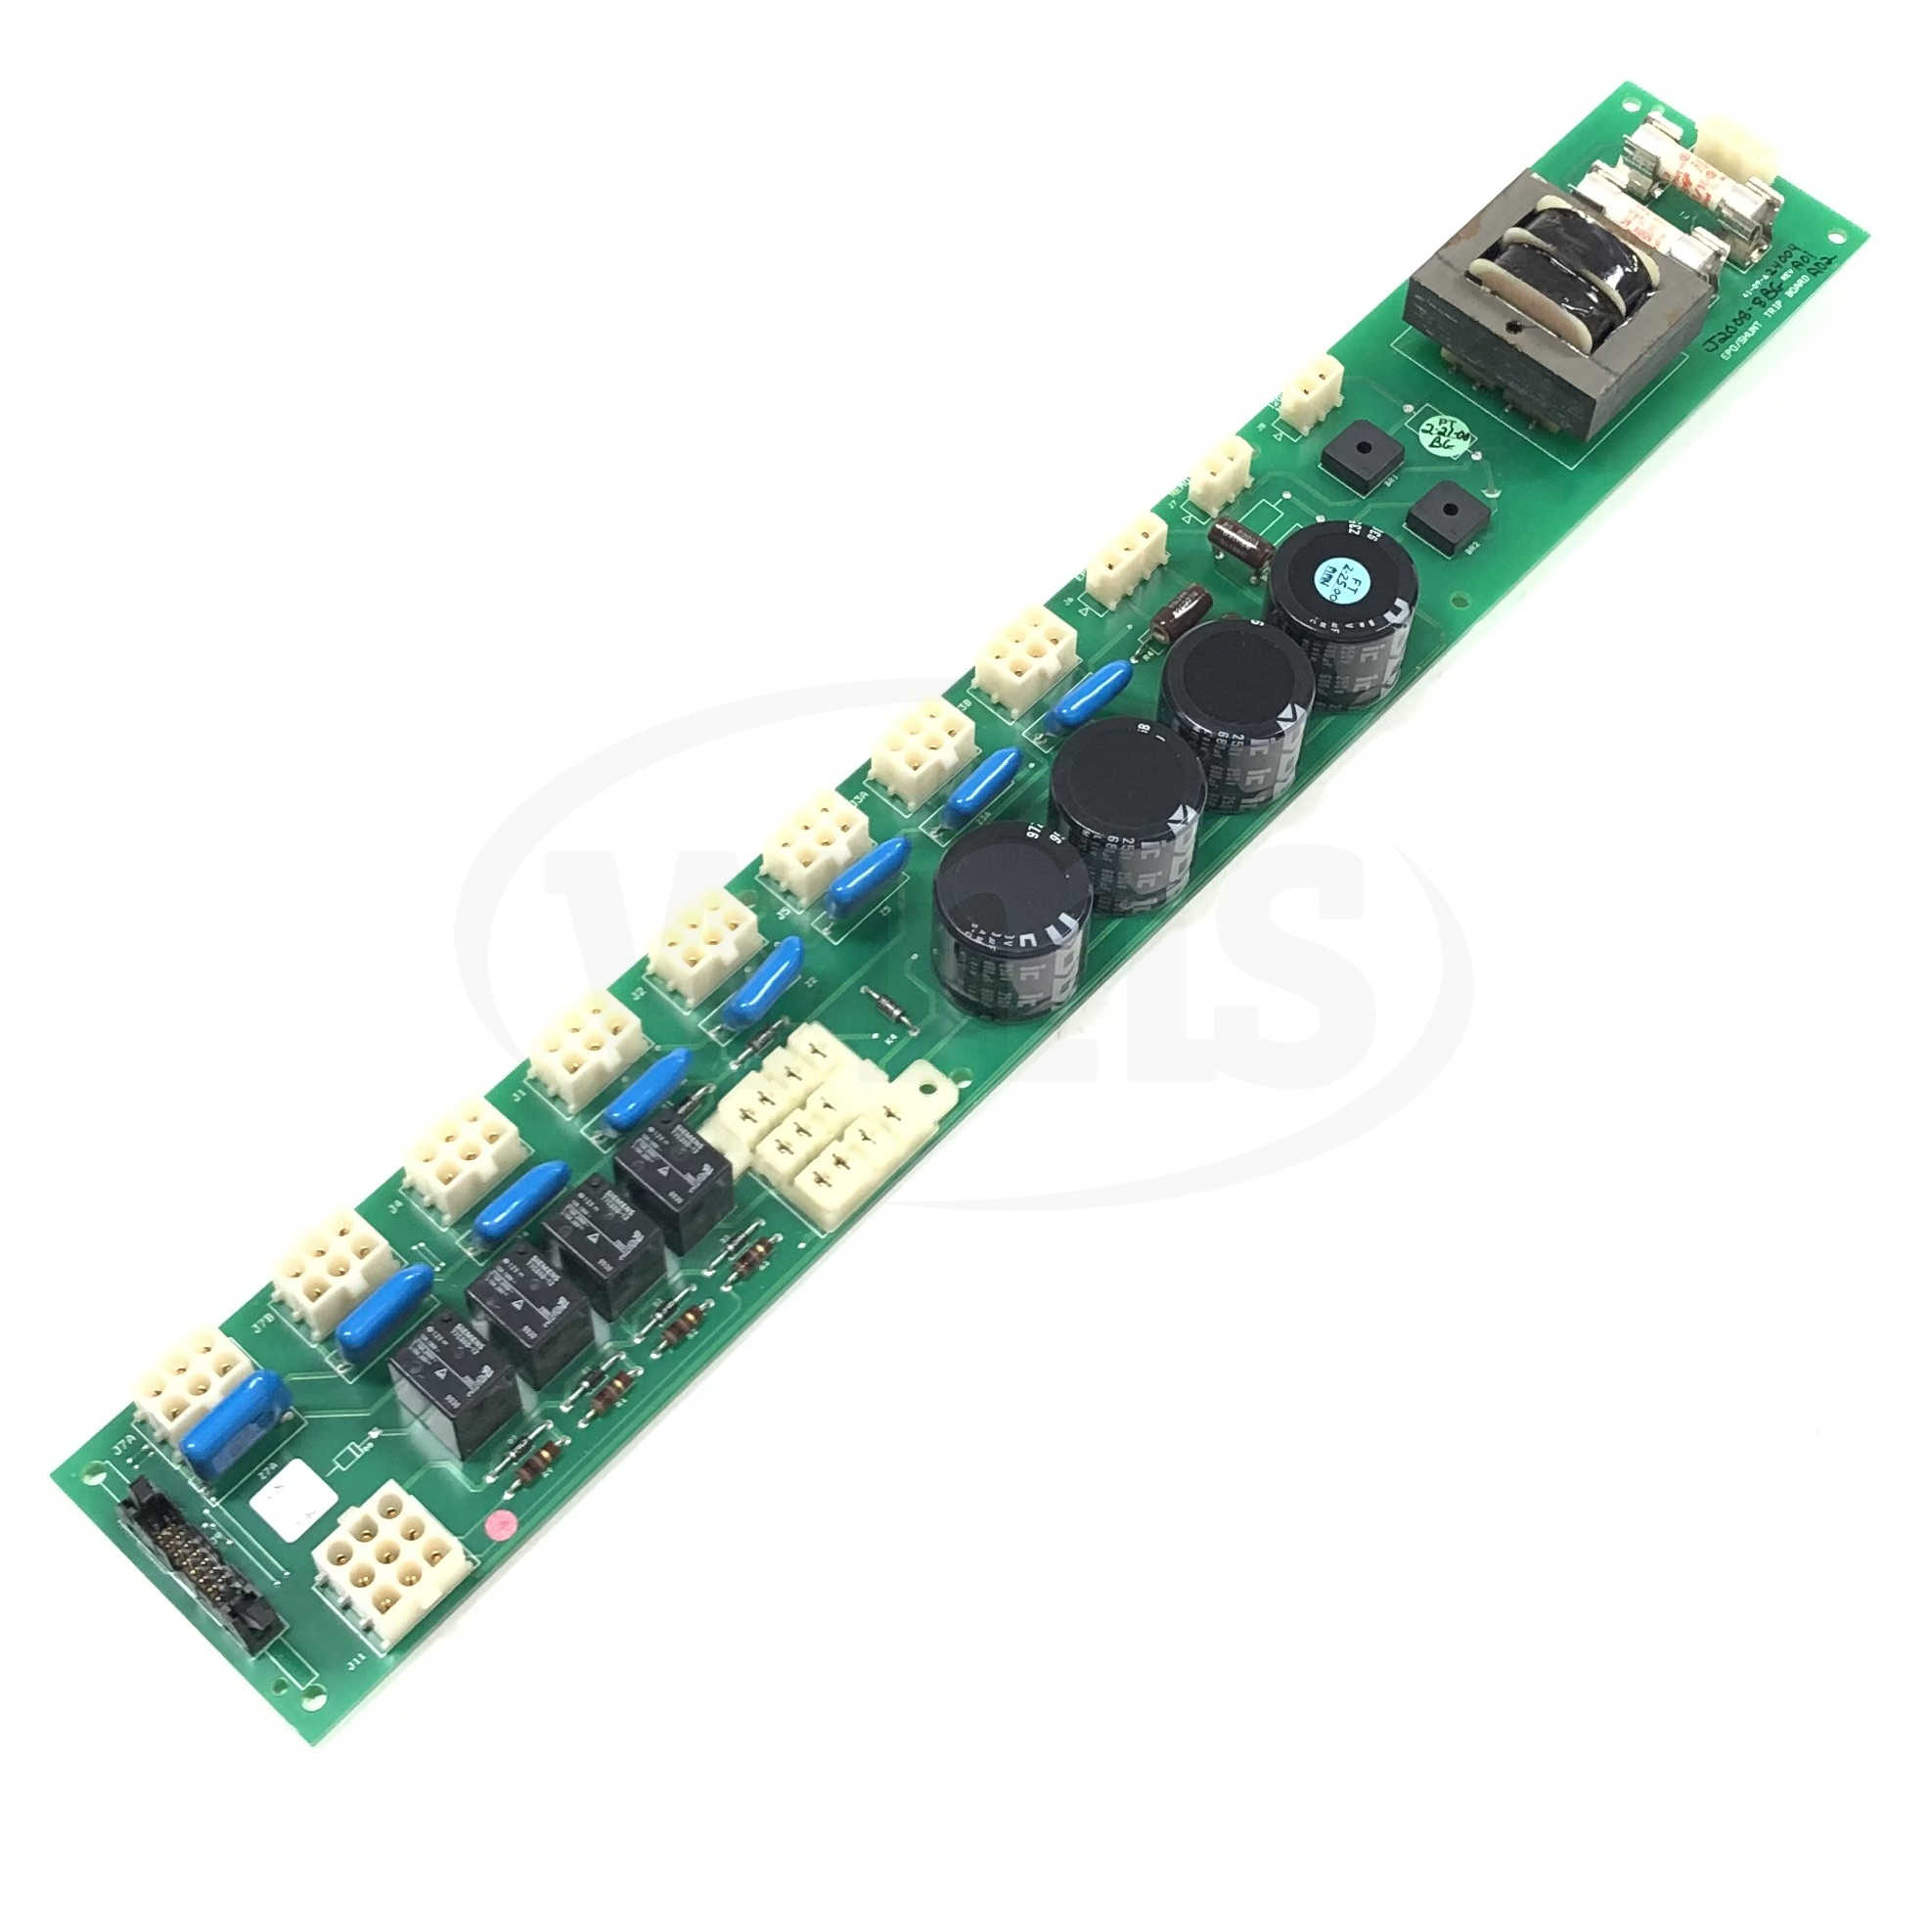 Cyberex 41-09-624004 Circuit Board EPO/Shunt Trip Module Assembly 2